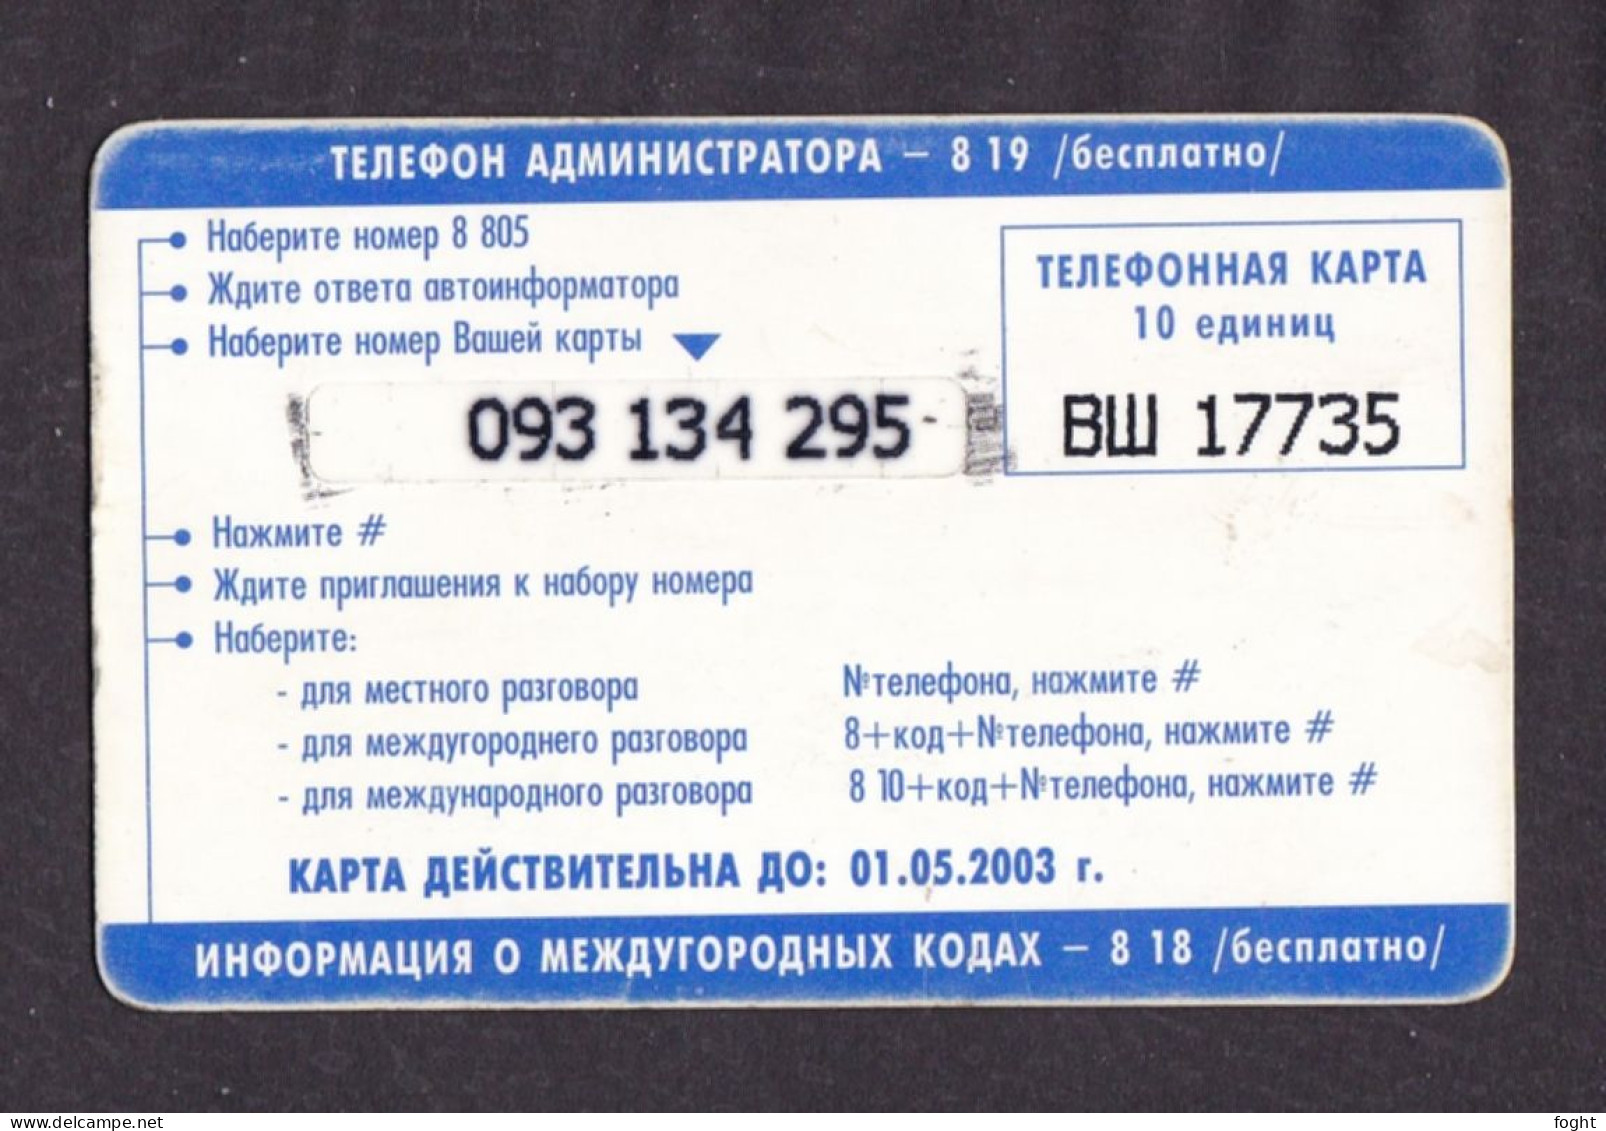 2002 ВШ Russia Udmurtia Province  10 Tariff Units Telephone Card - Russie